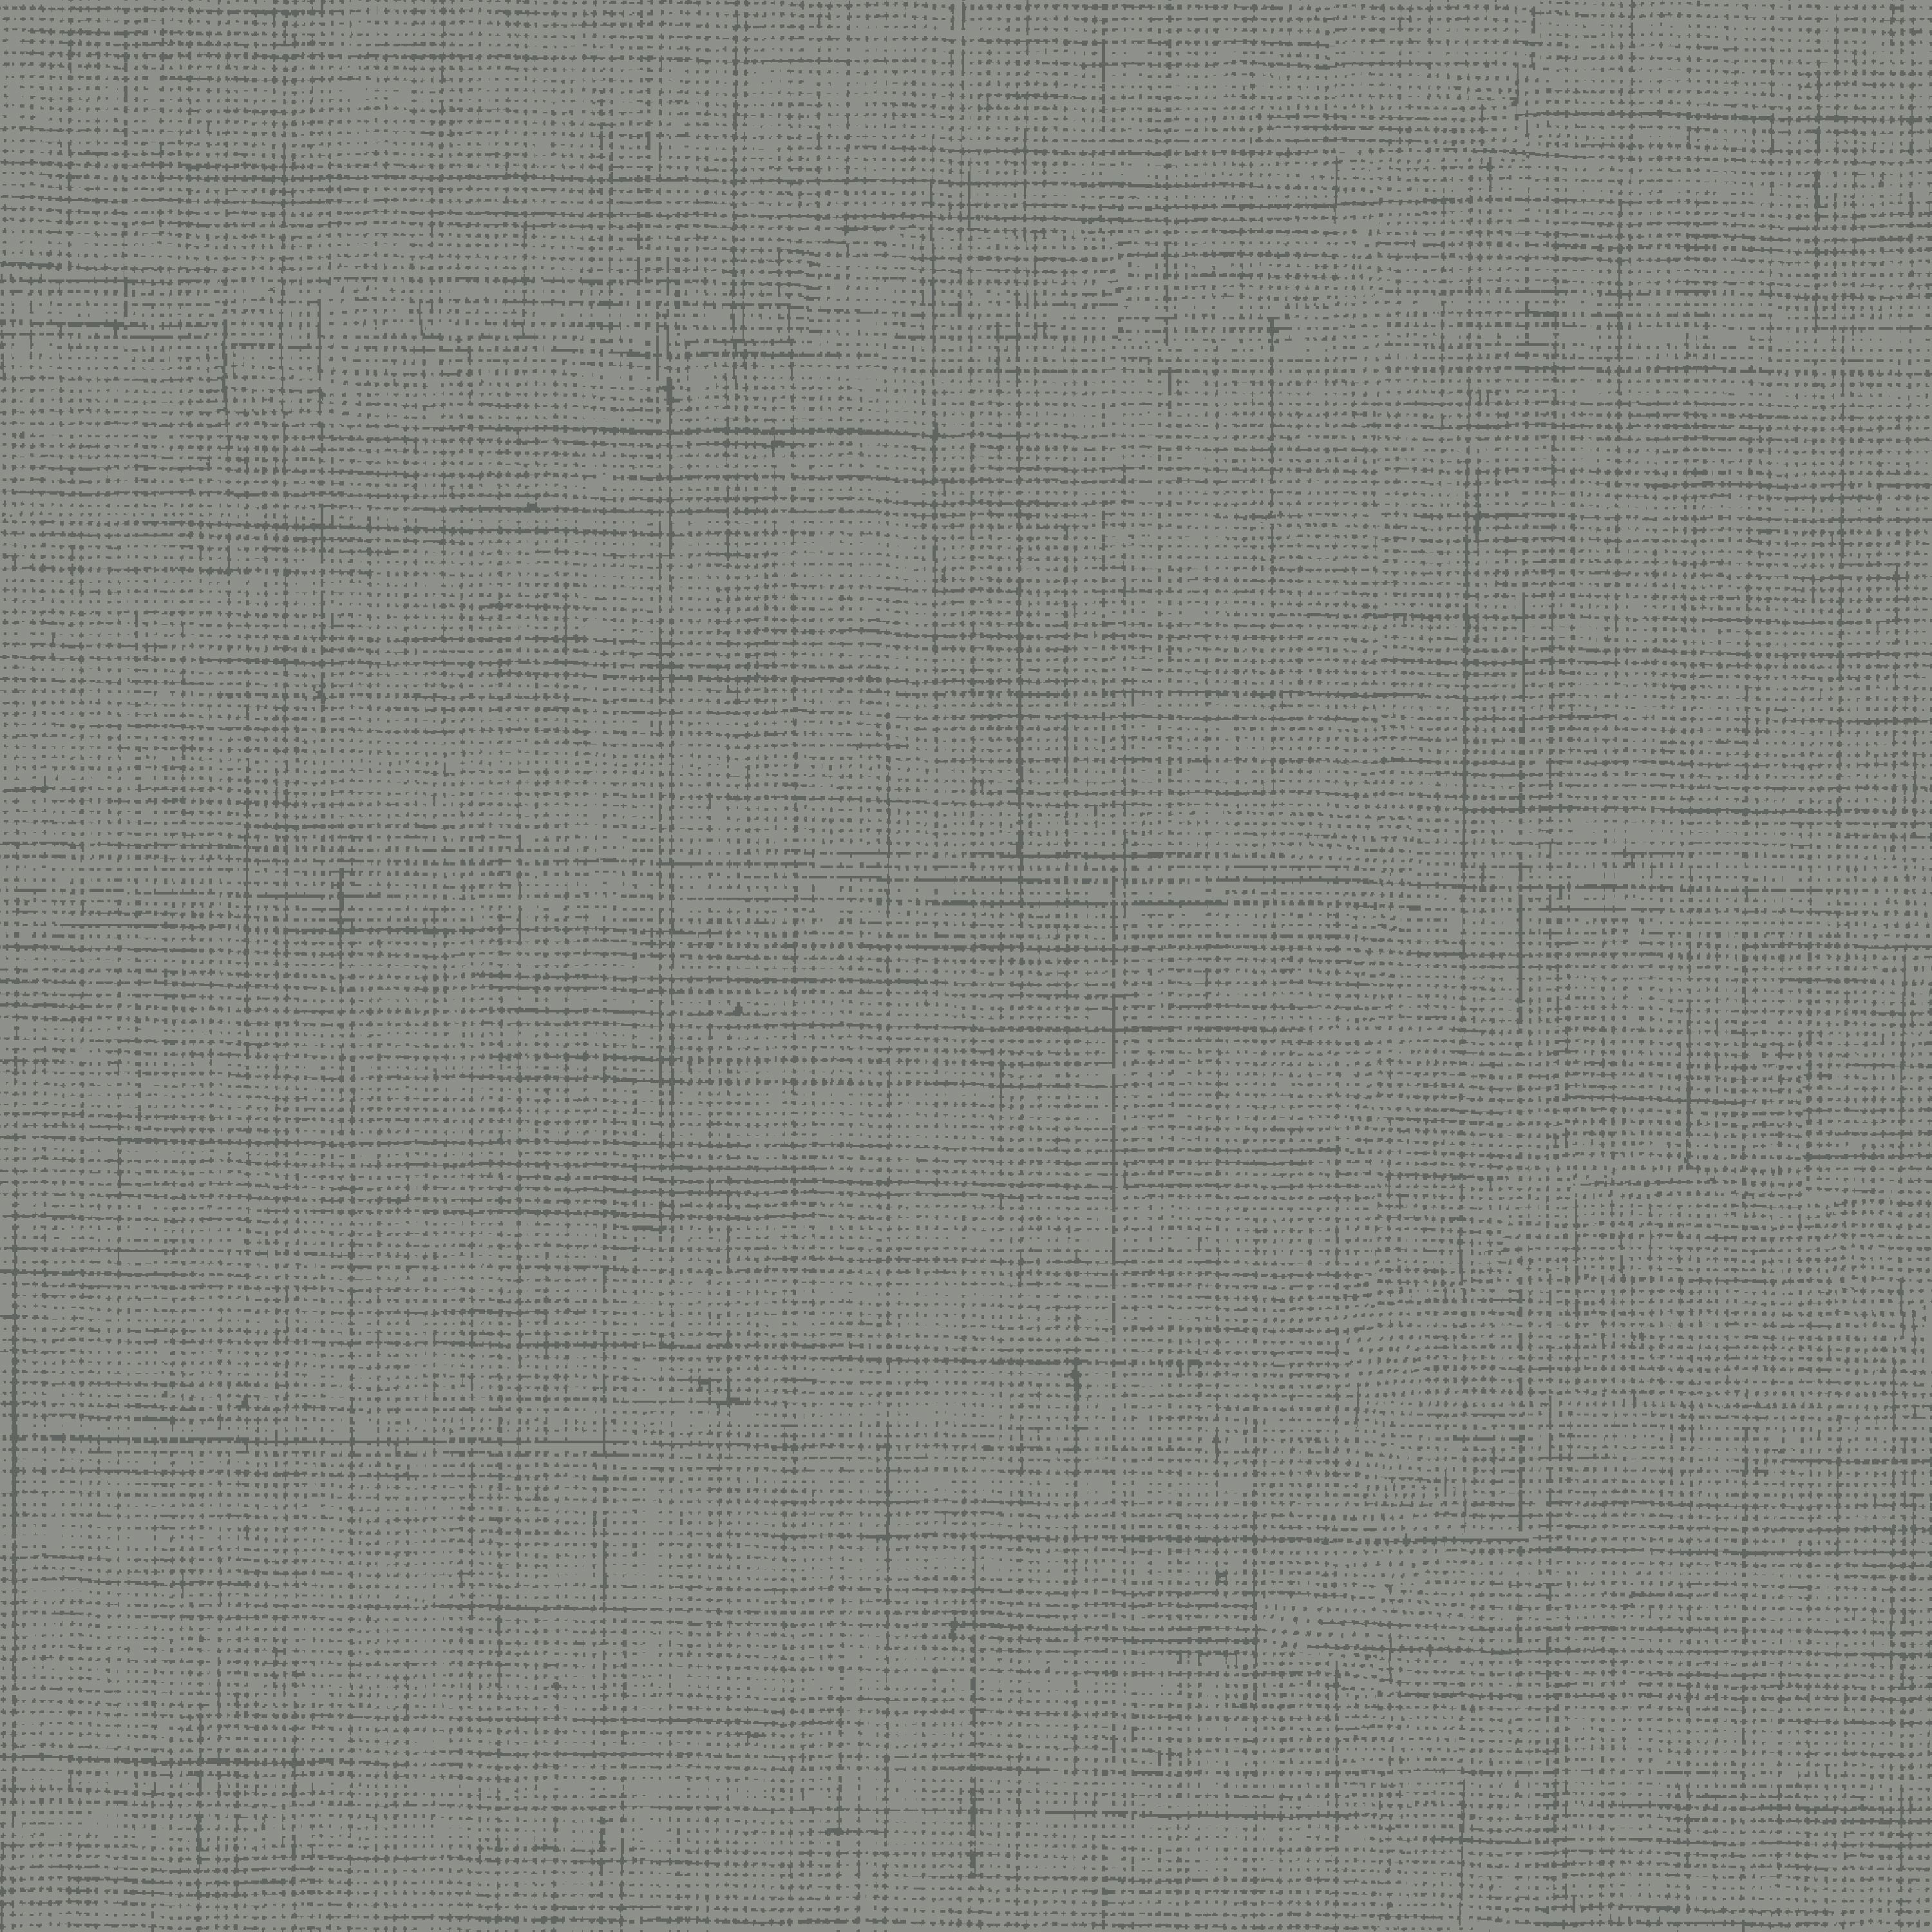 Waverly Inspirations 100 Cotton Duck 54 Texture Dark Grey Color Sewing Fabric By The Yard Walmart Com Walmart Com